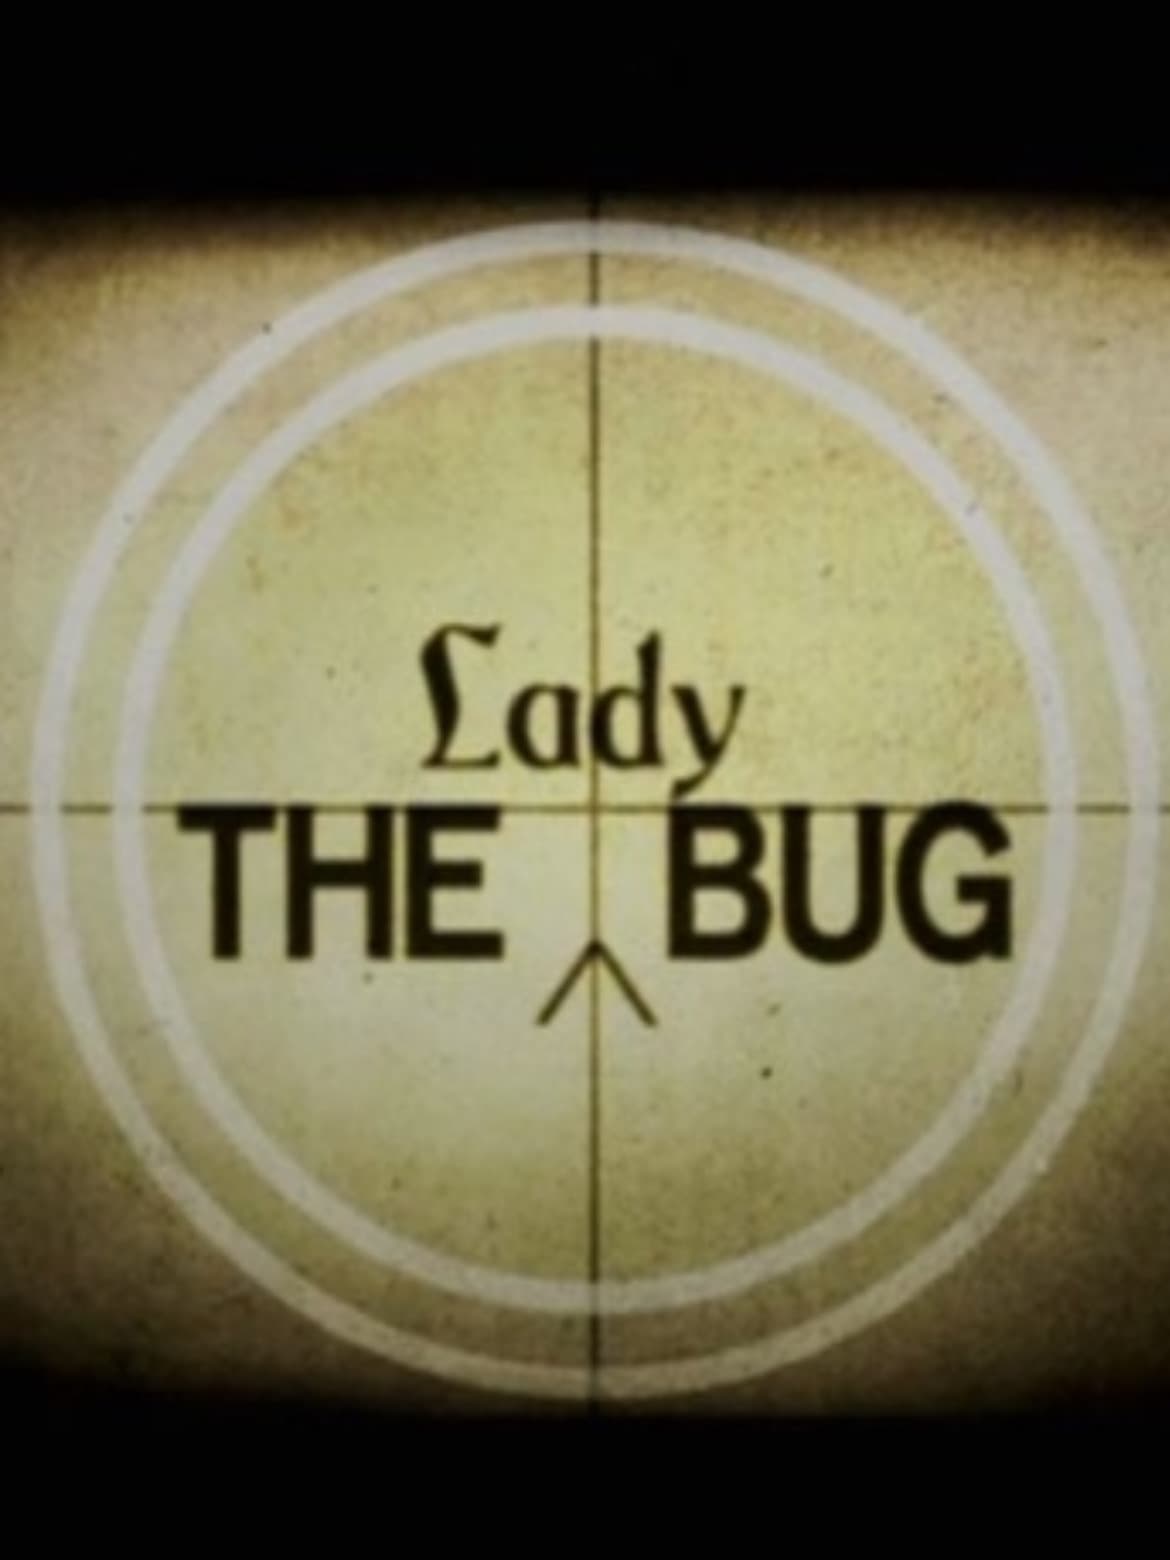 The Lady Bug